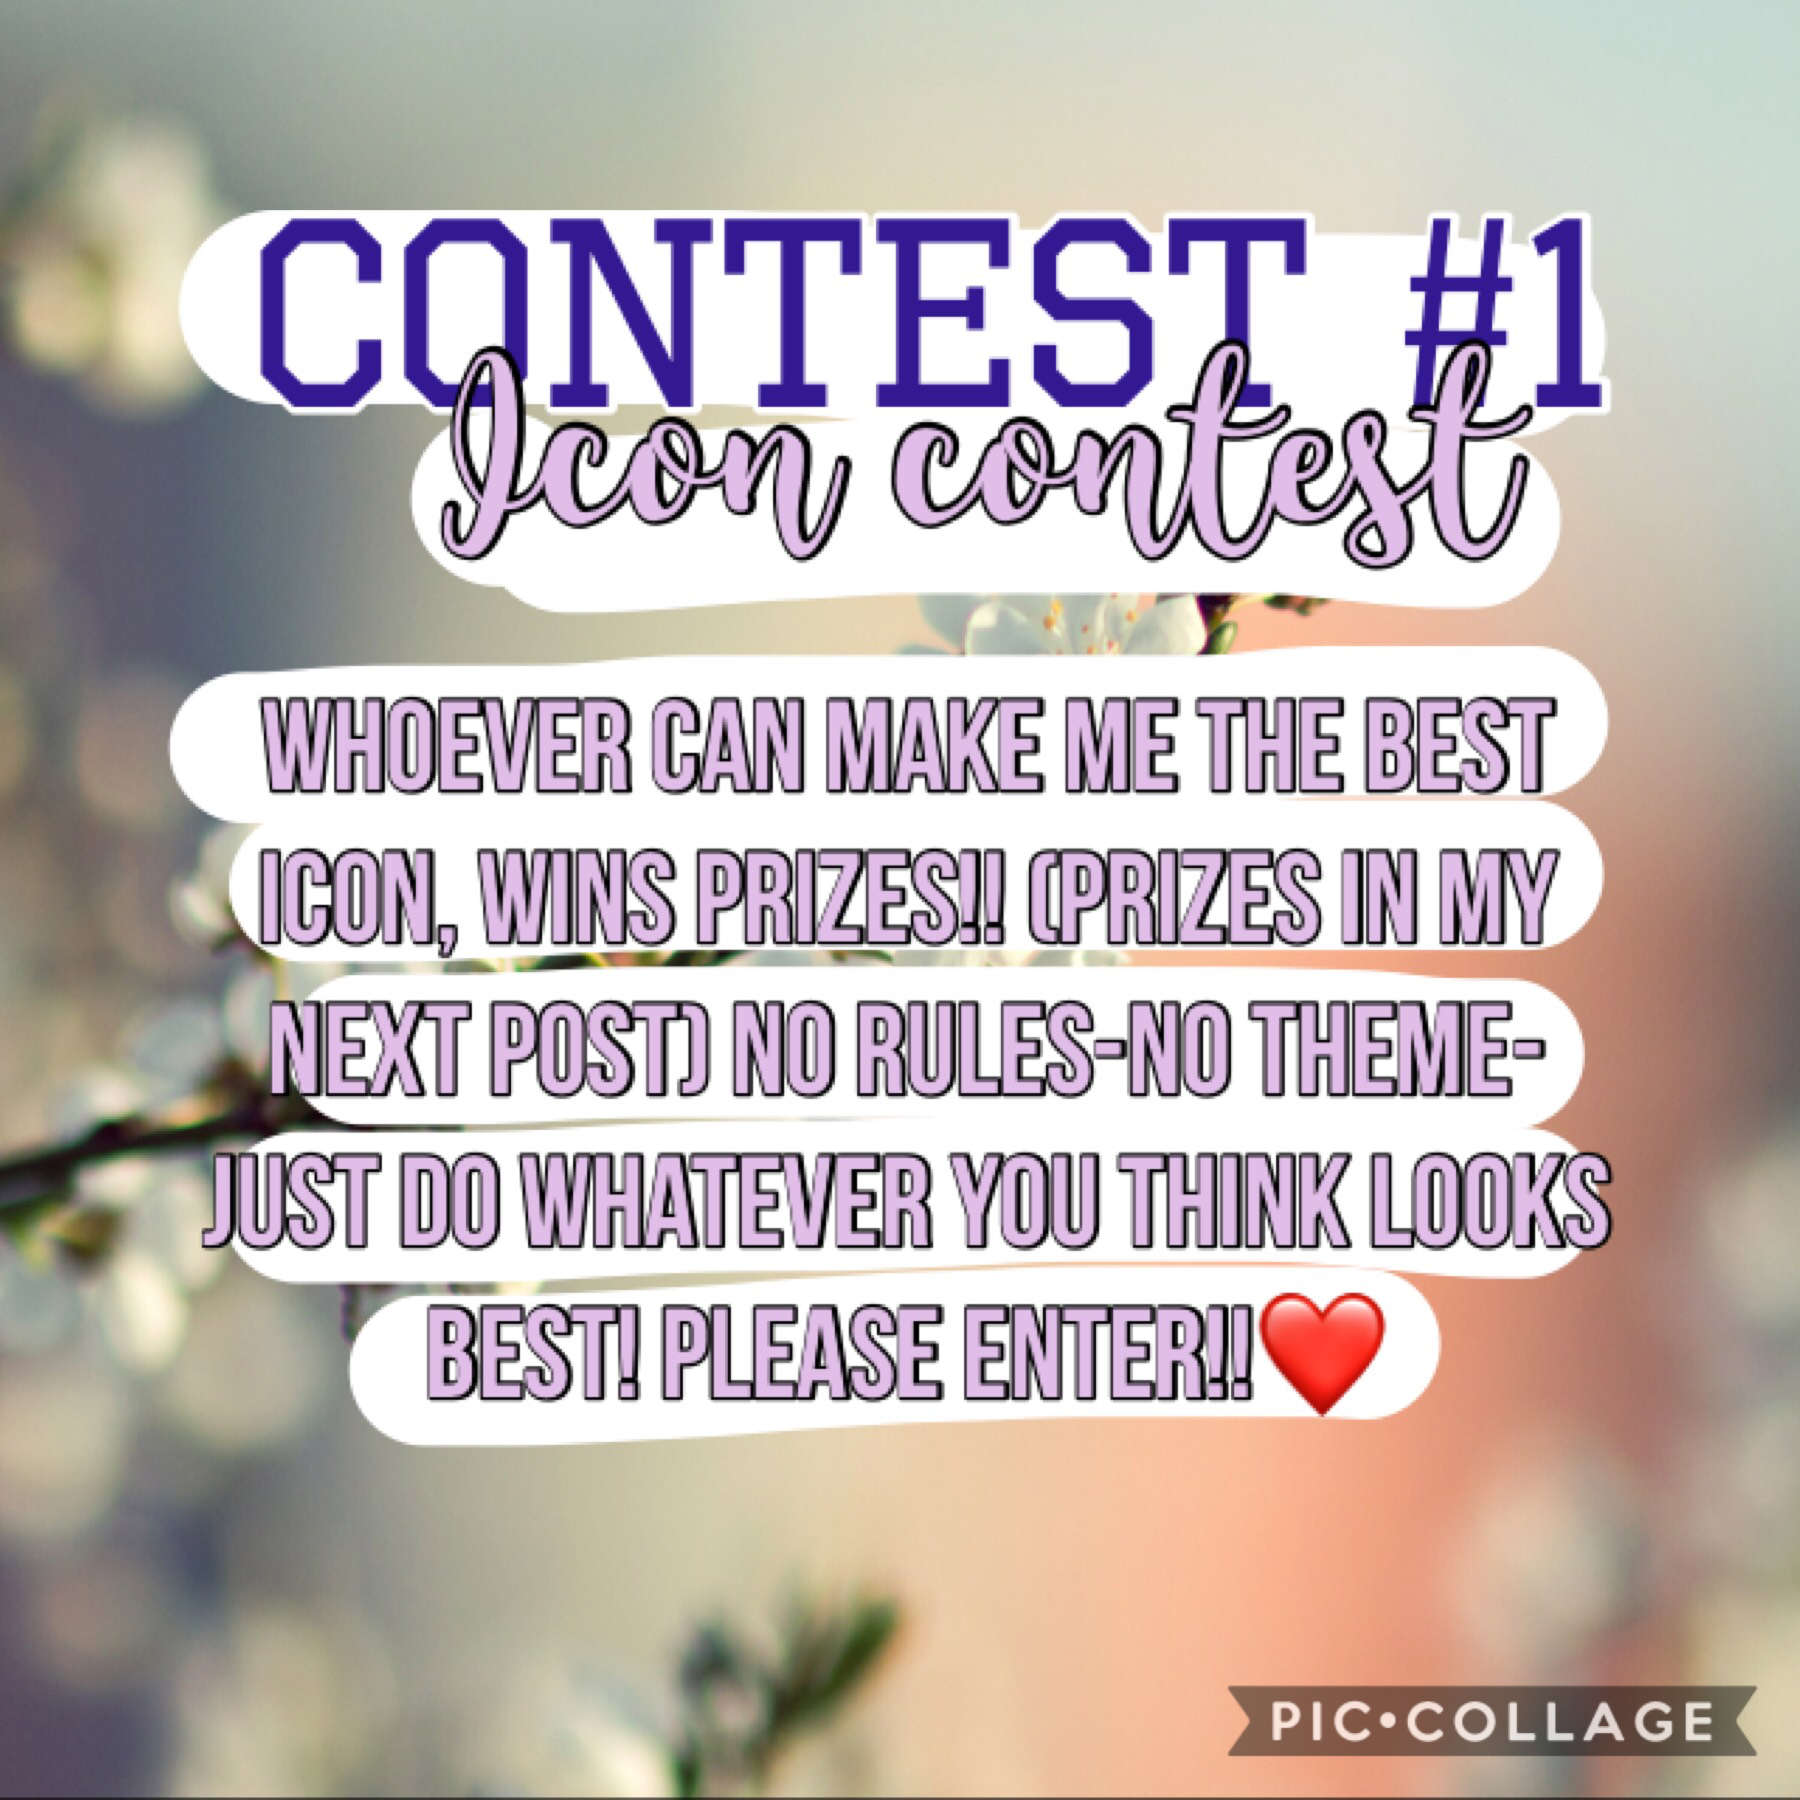 Contest #1!